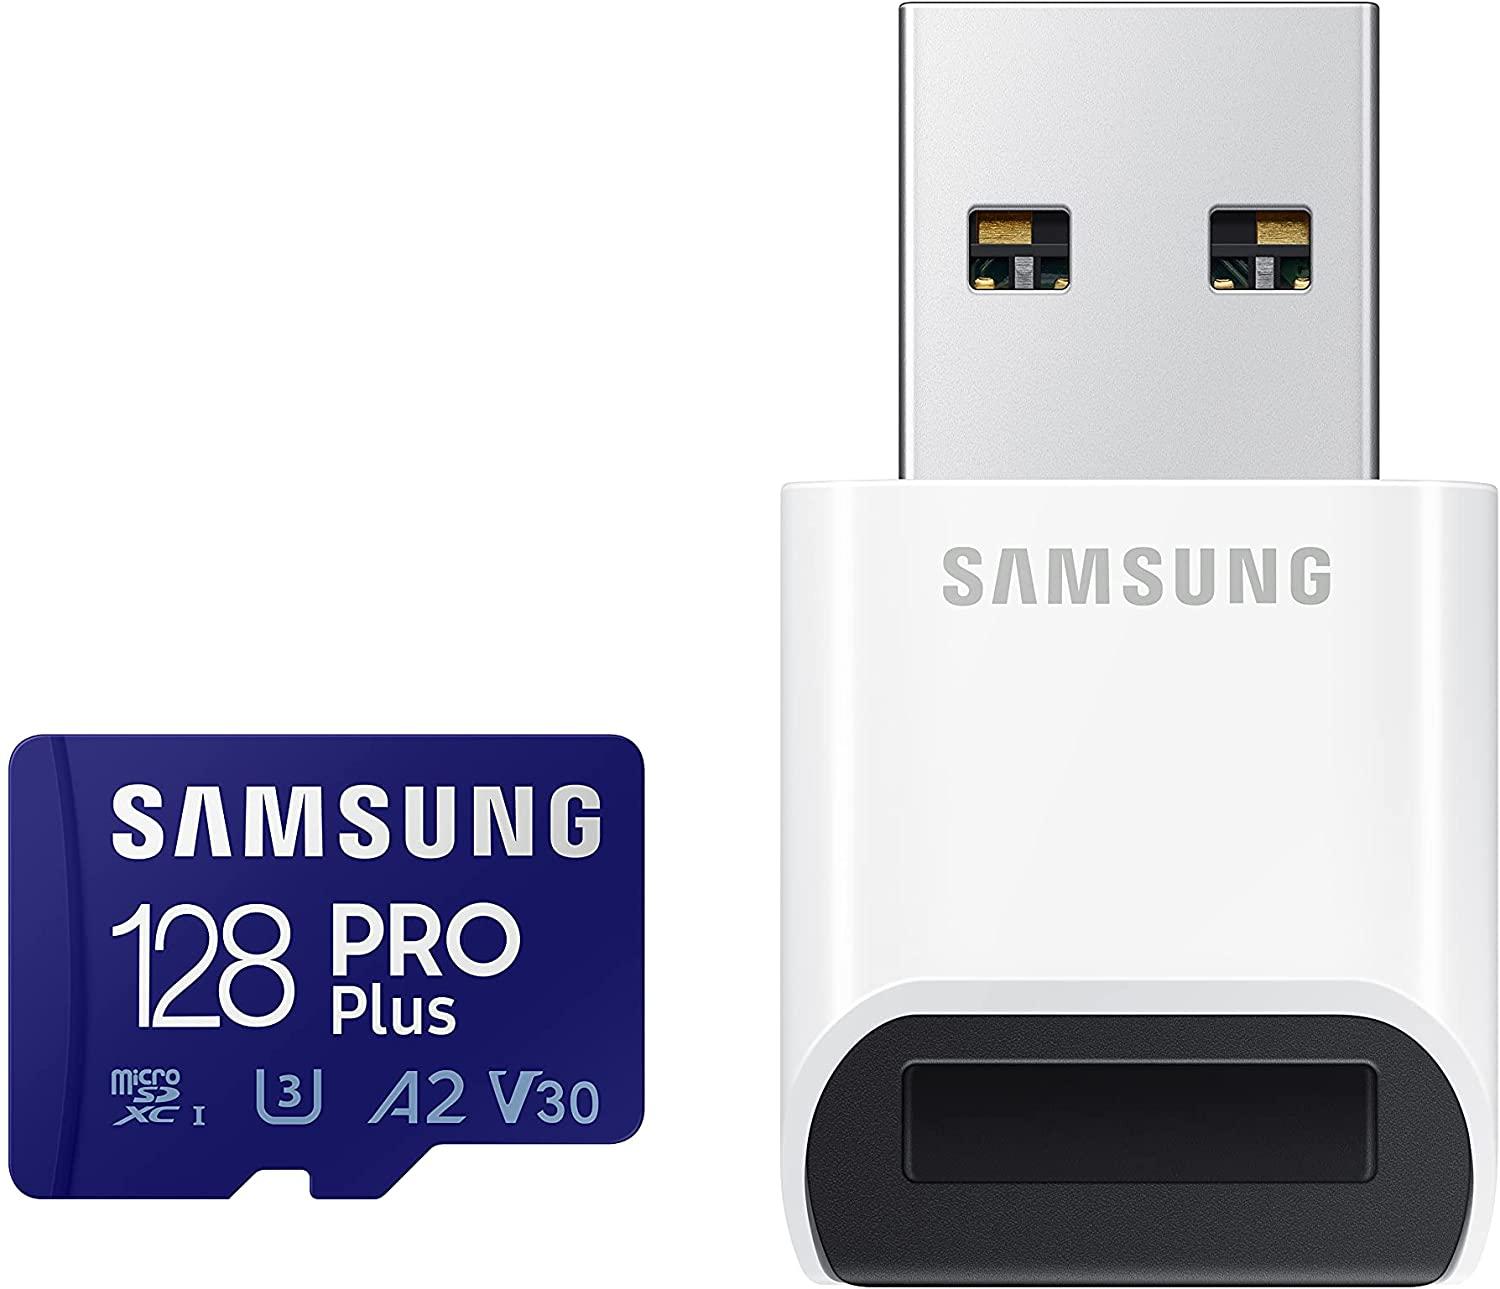 128GB Samsung Pro Plus microSDXC Memory Card for $27.99 Shipped